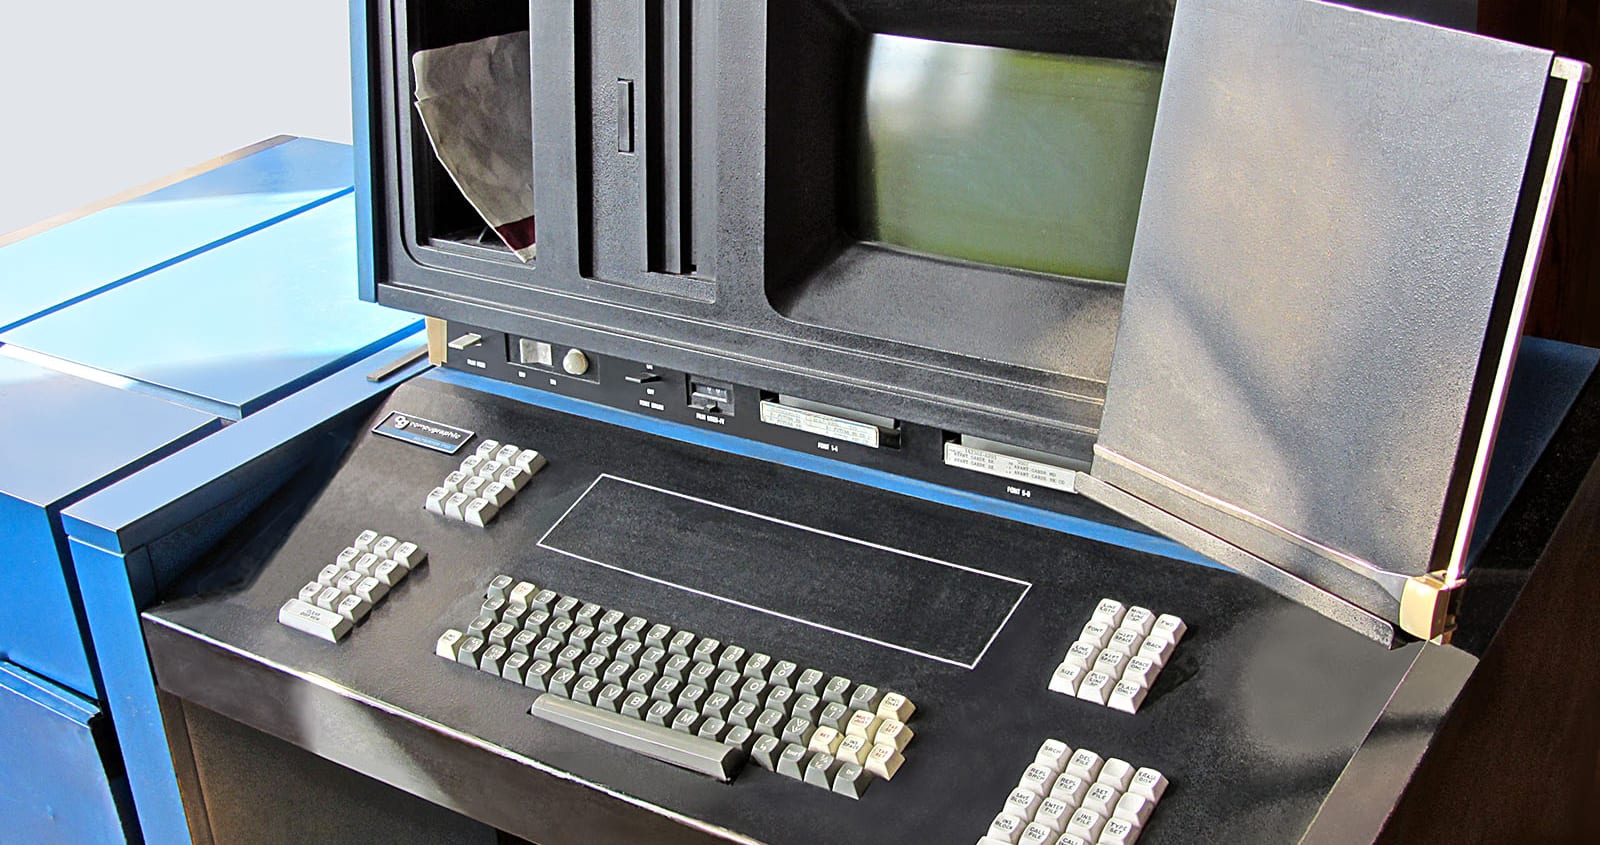 Photo of a Compugraphic EditWriter 7500